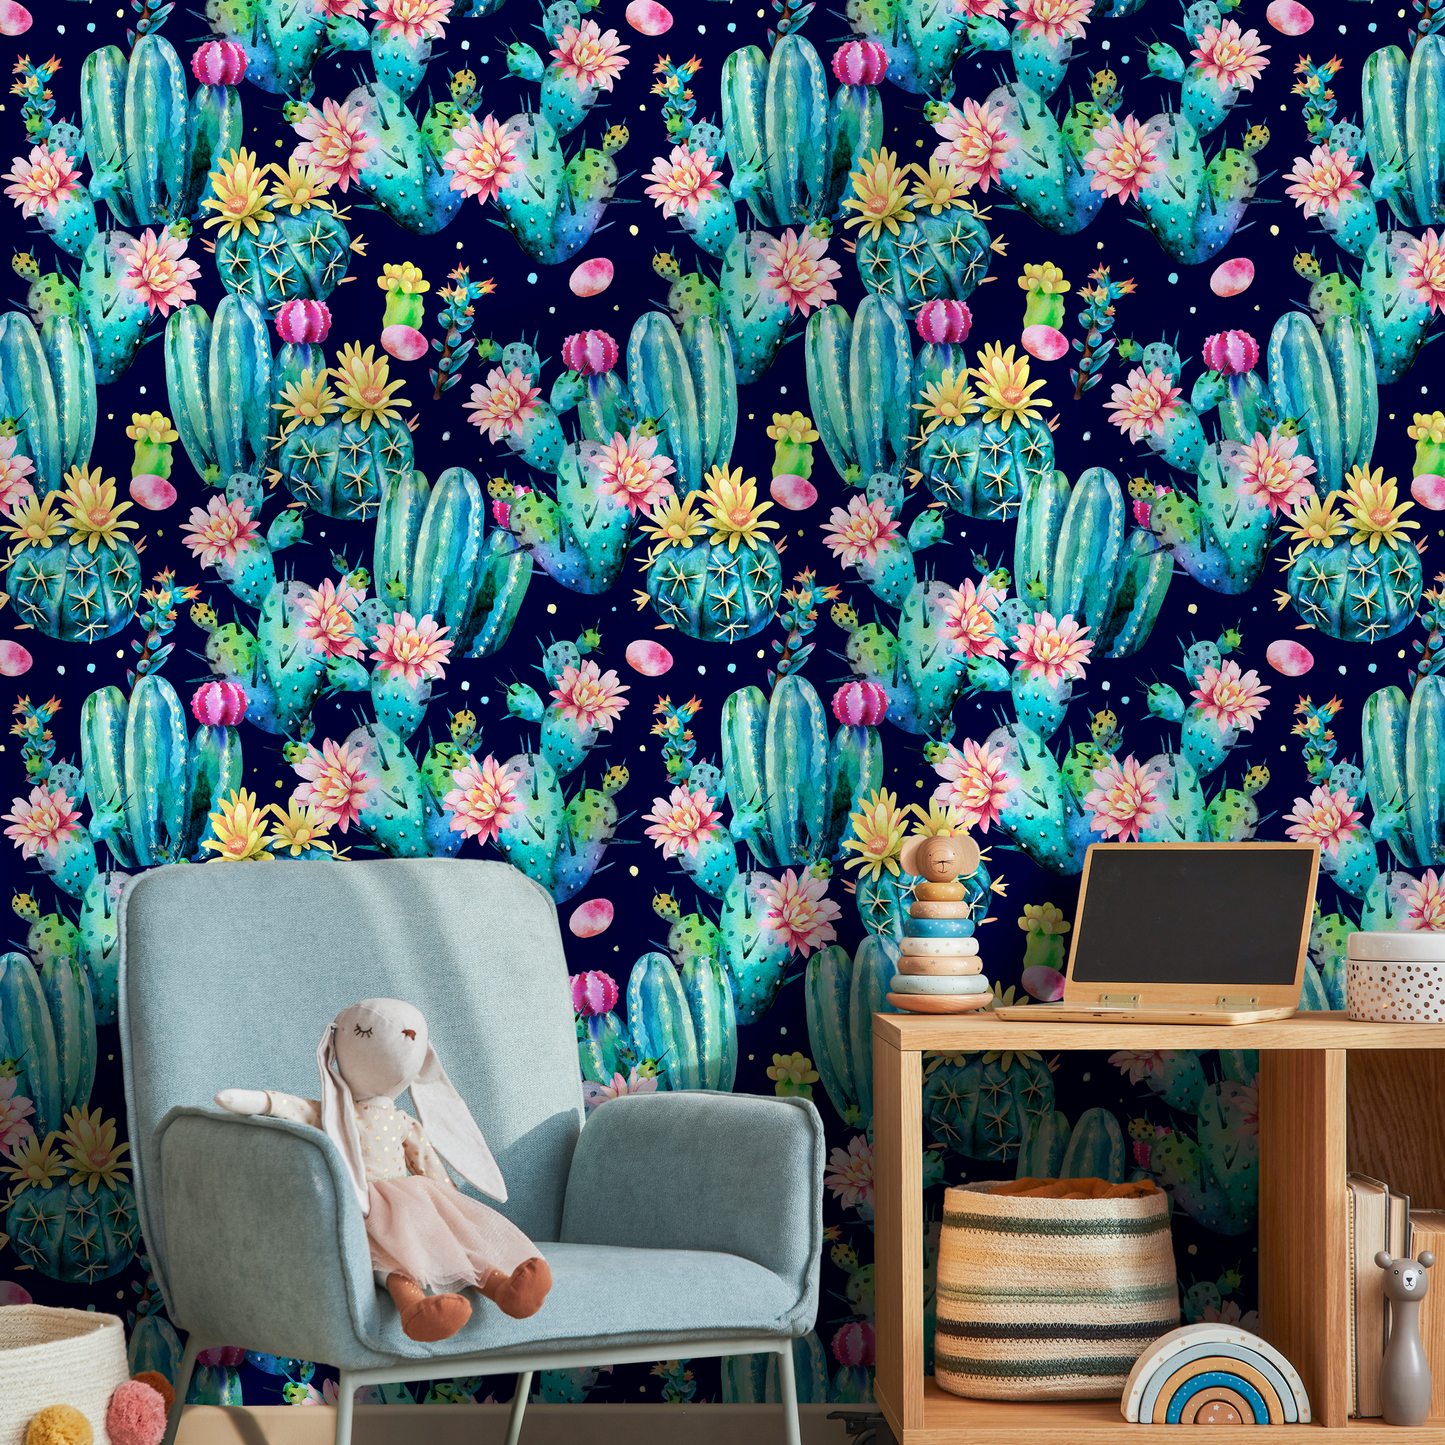 Floral Cactus Wallpaper Watercolor Wallpaper Peel and Stick and Traditional Wallpaper - B022